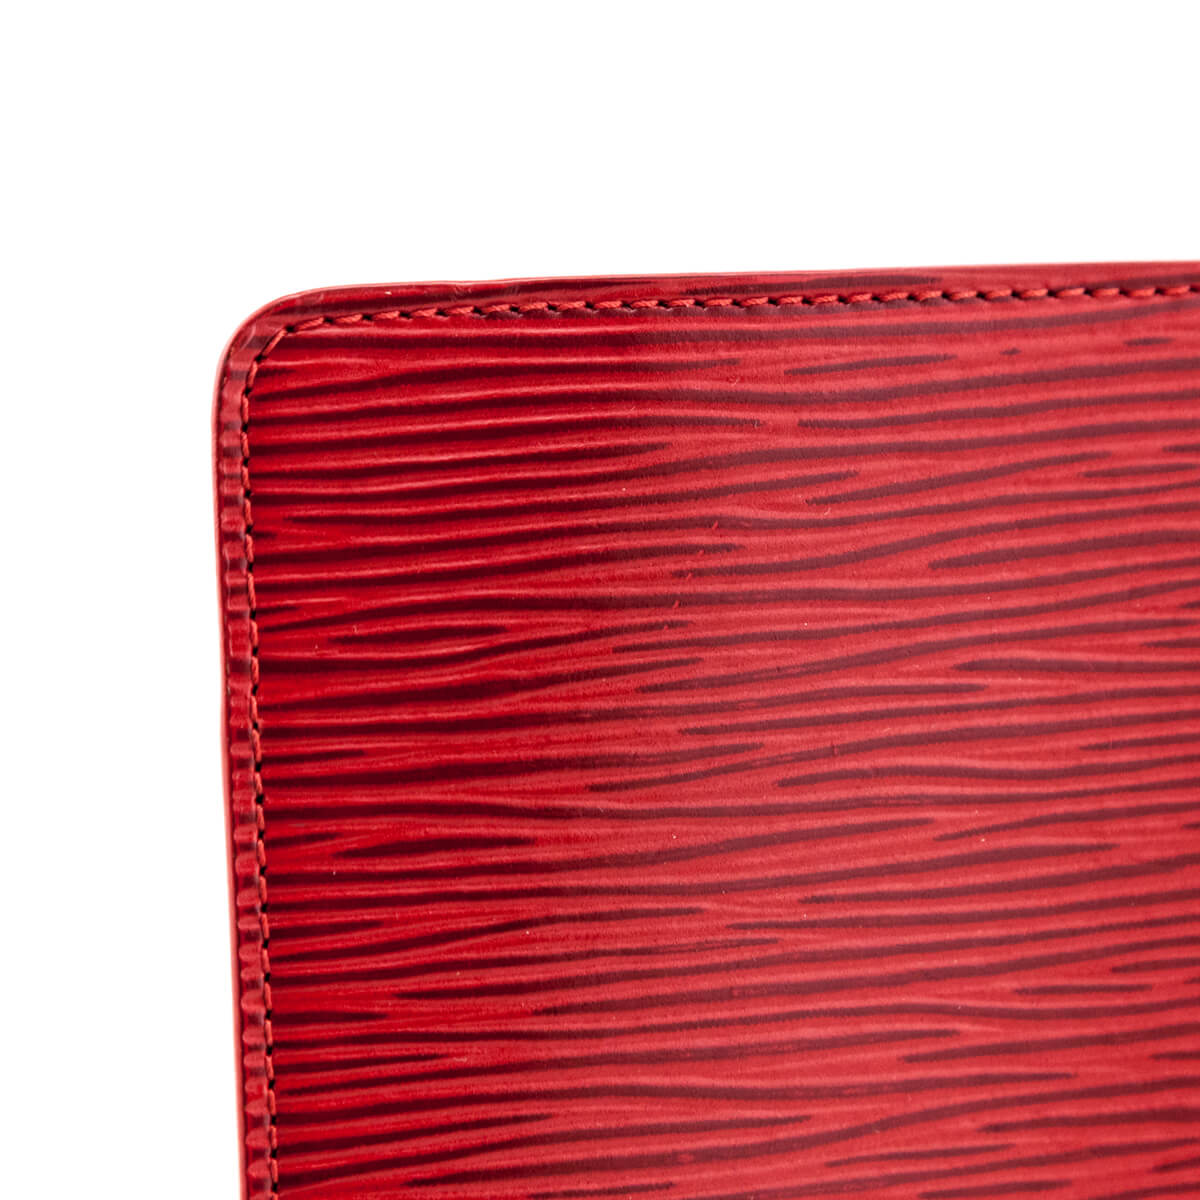 Louis Vuitton Agenda MM Red Epi Diary Cover 10853